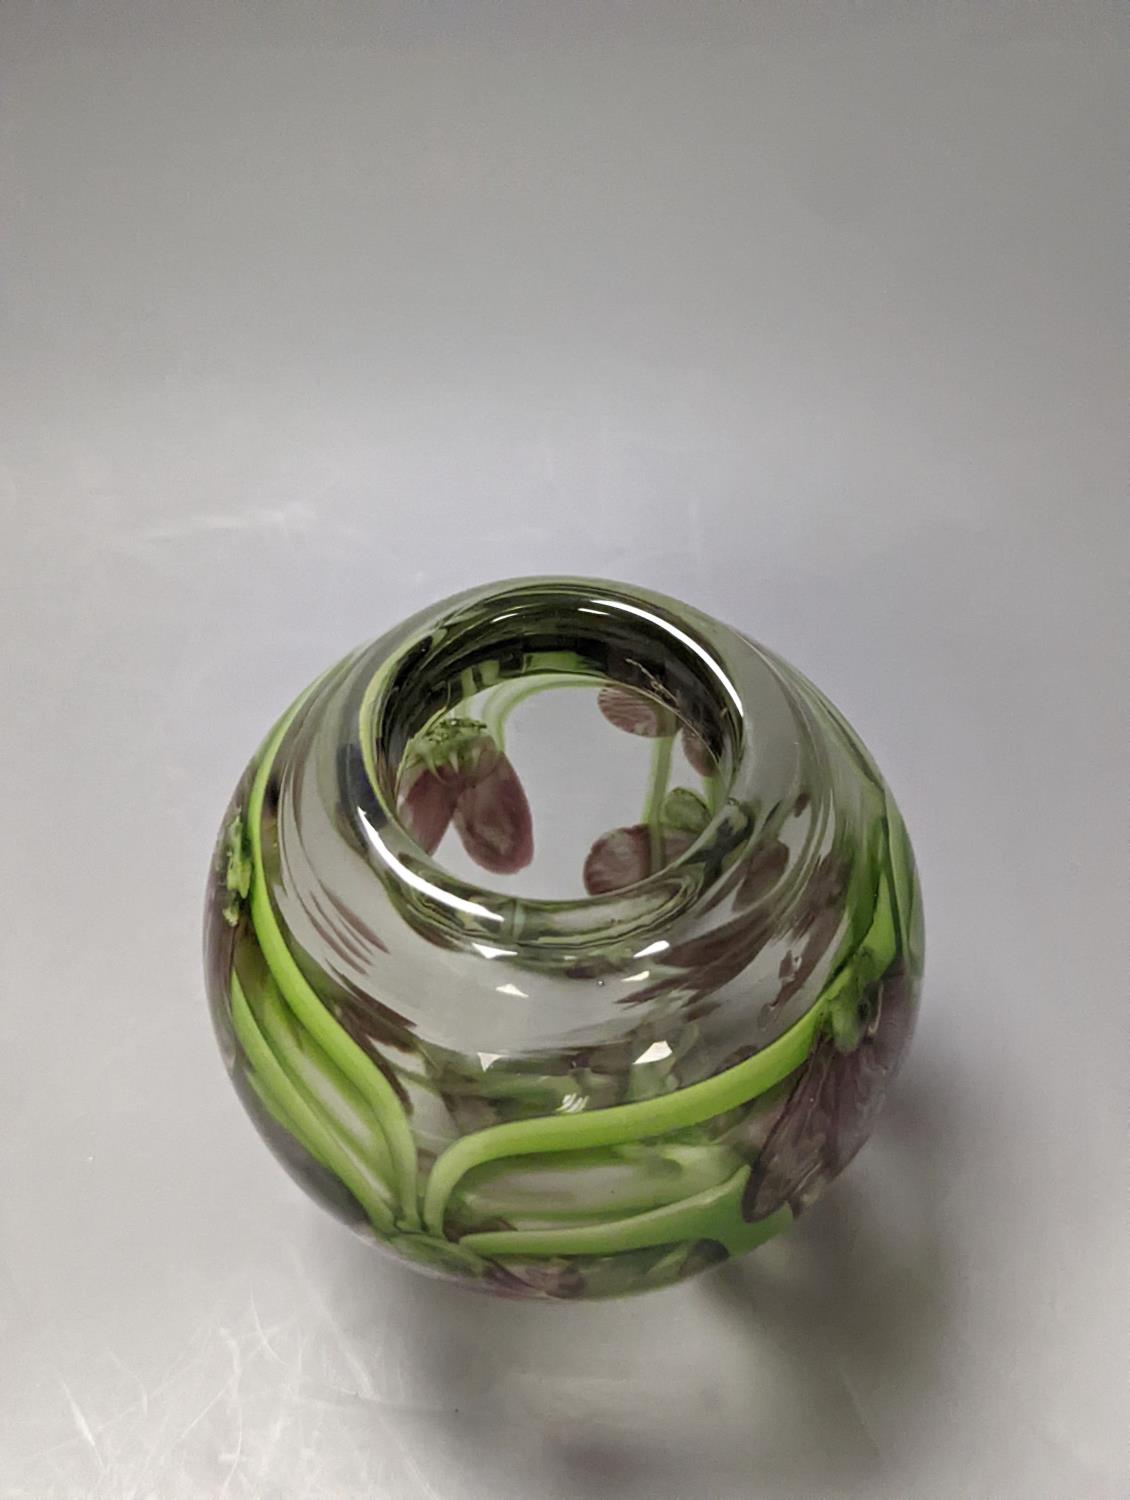 An Art glass lamp work vase 13.5cm - Image 2 of 3